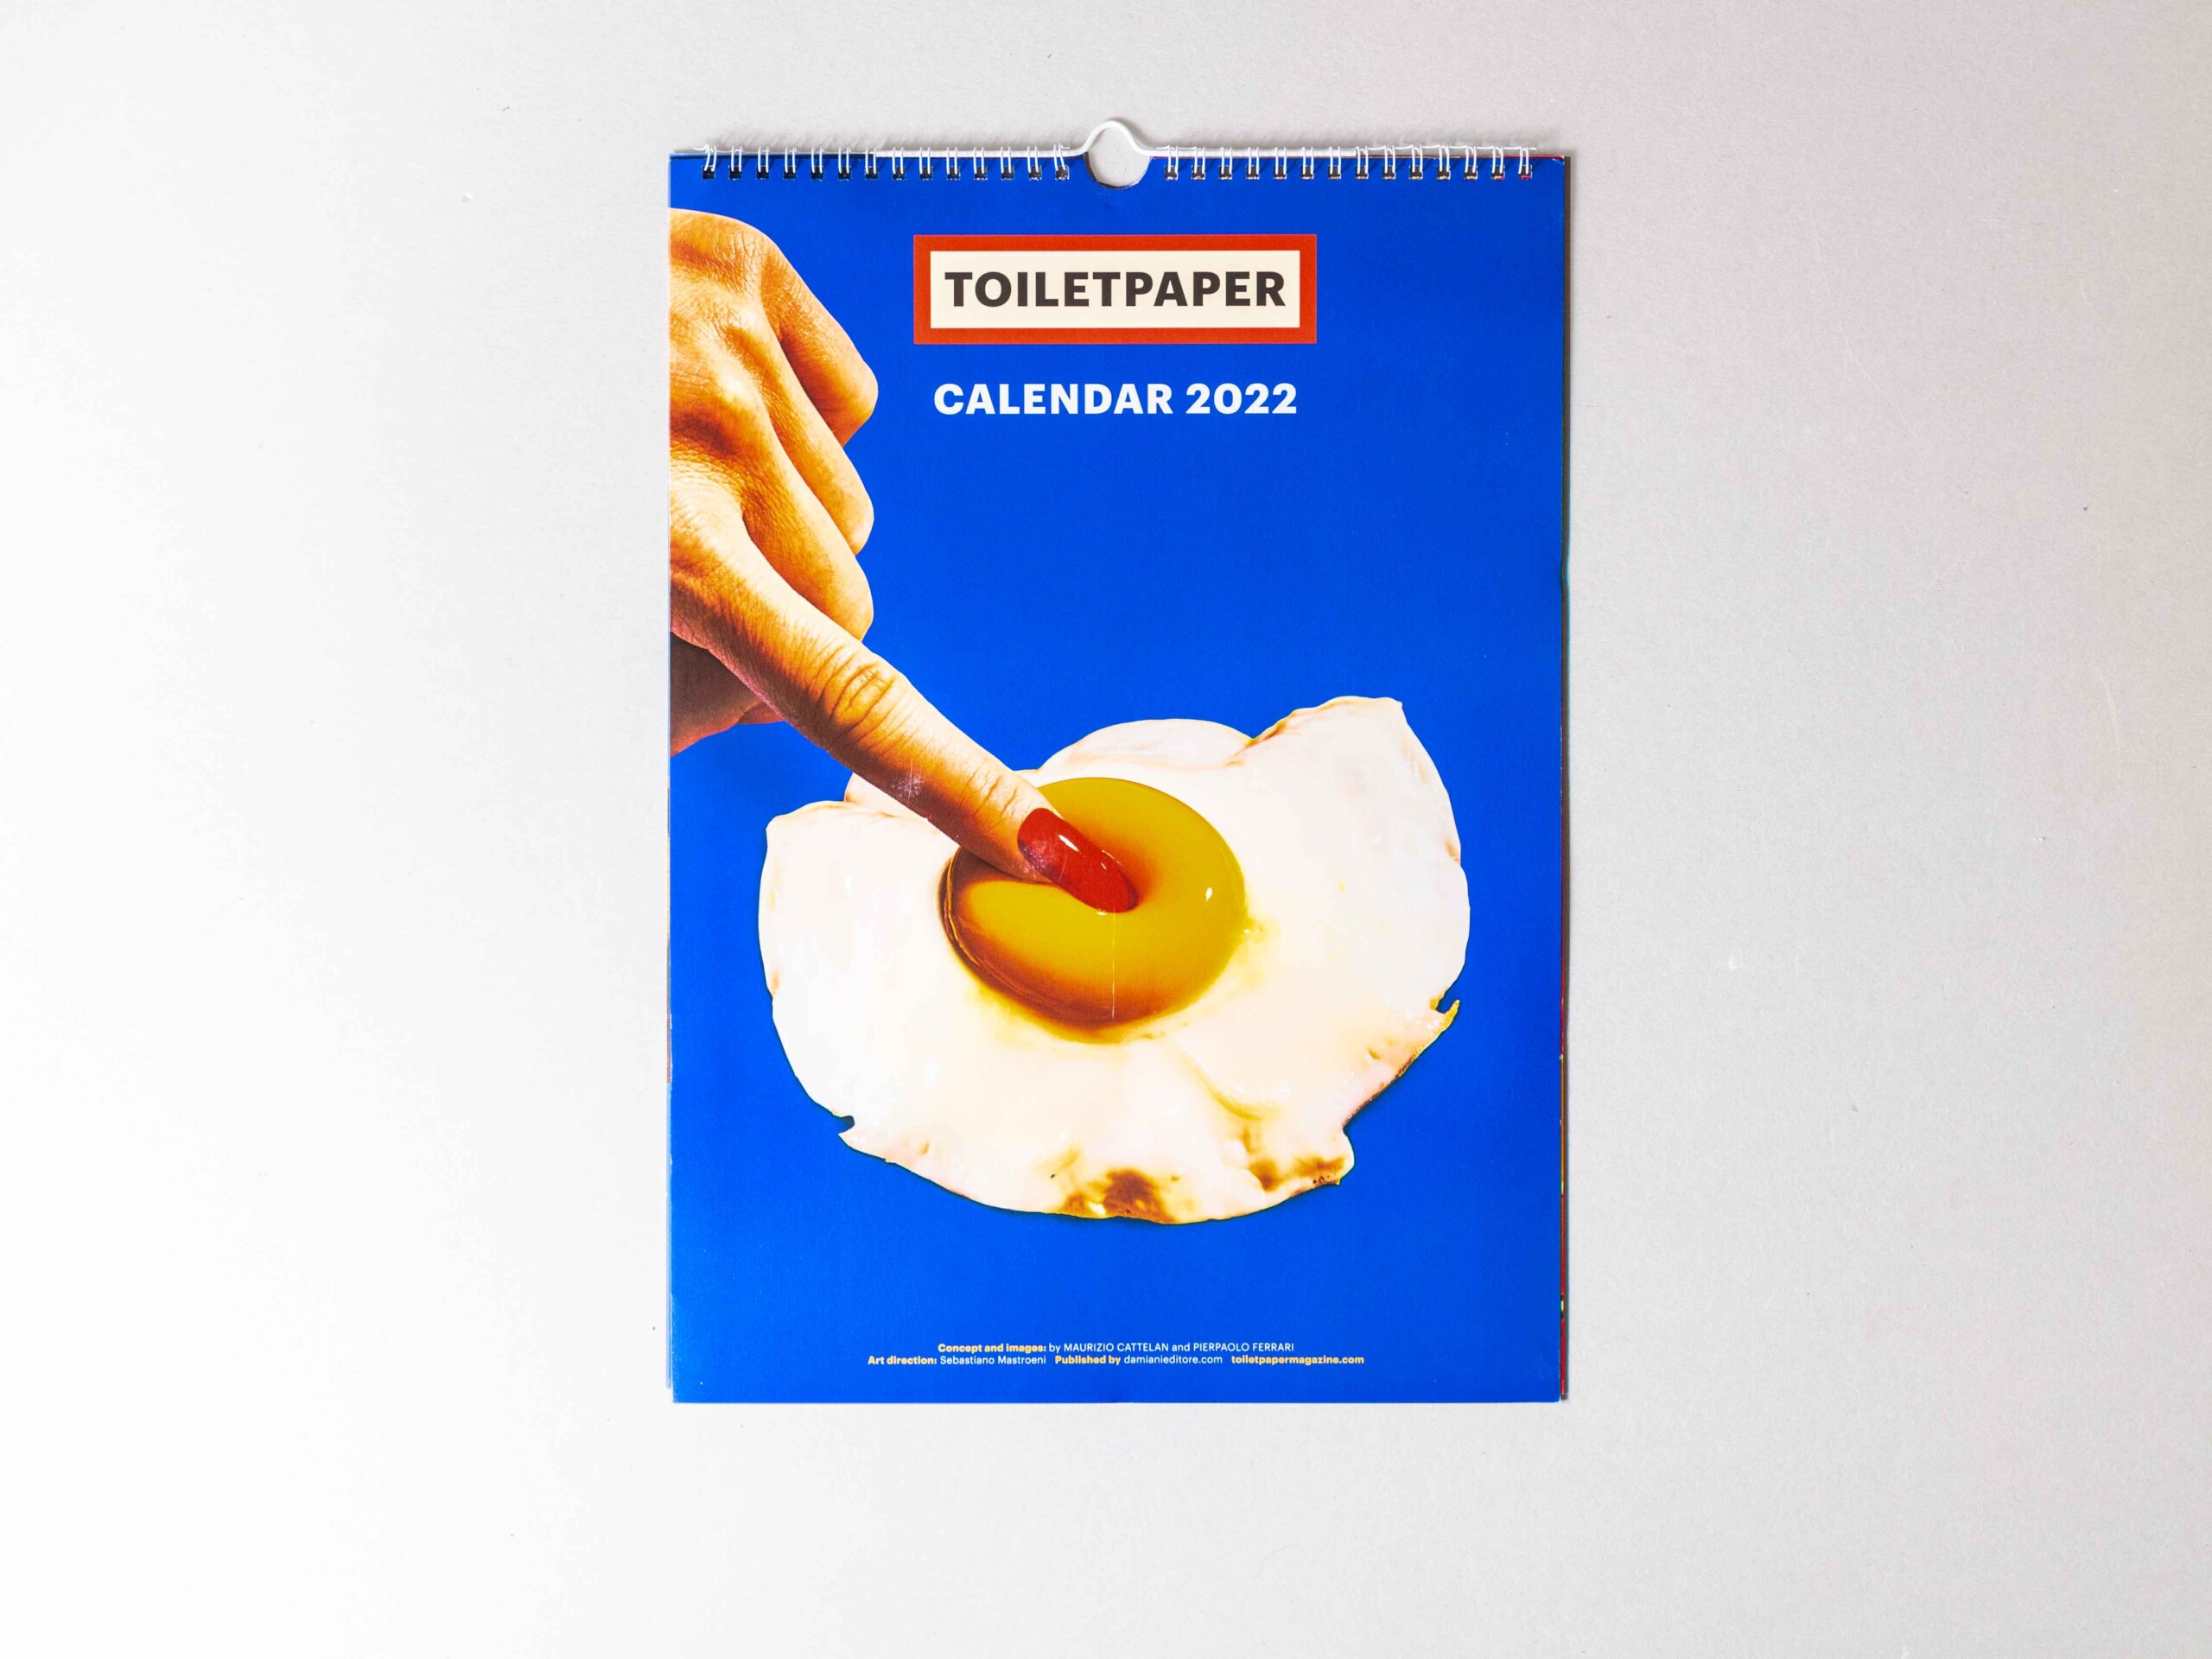 Toiletpaper Calendar 2022 Edicola 518